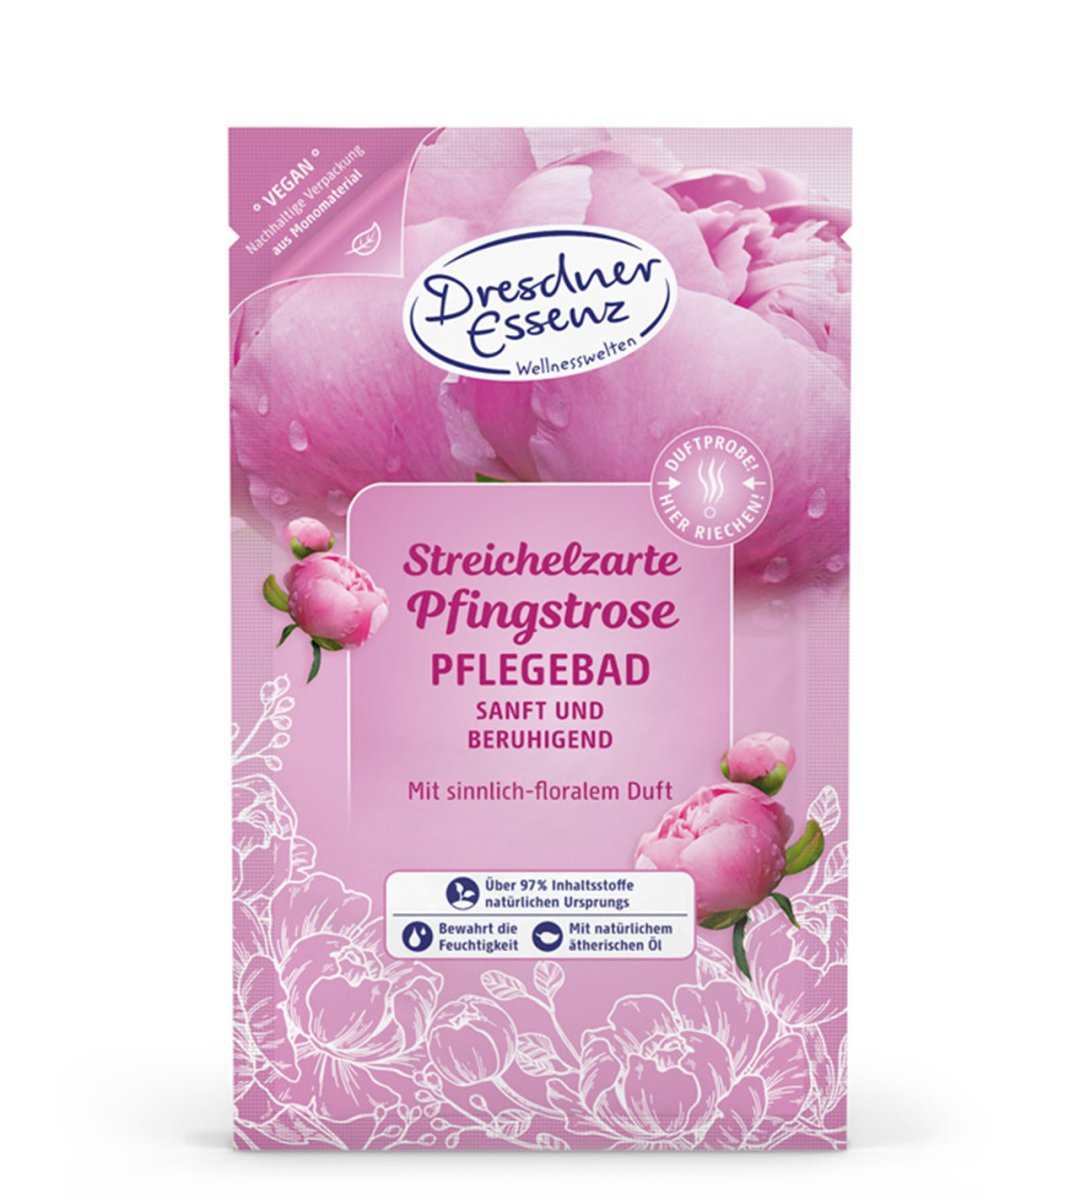 Dresdner Essenz® | Blossom Beauty Set | Wellness für Zuhause | 2x 20 ml | 2x 60 g